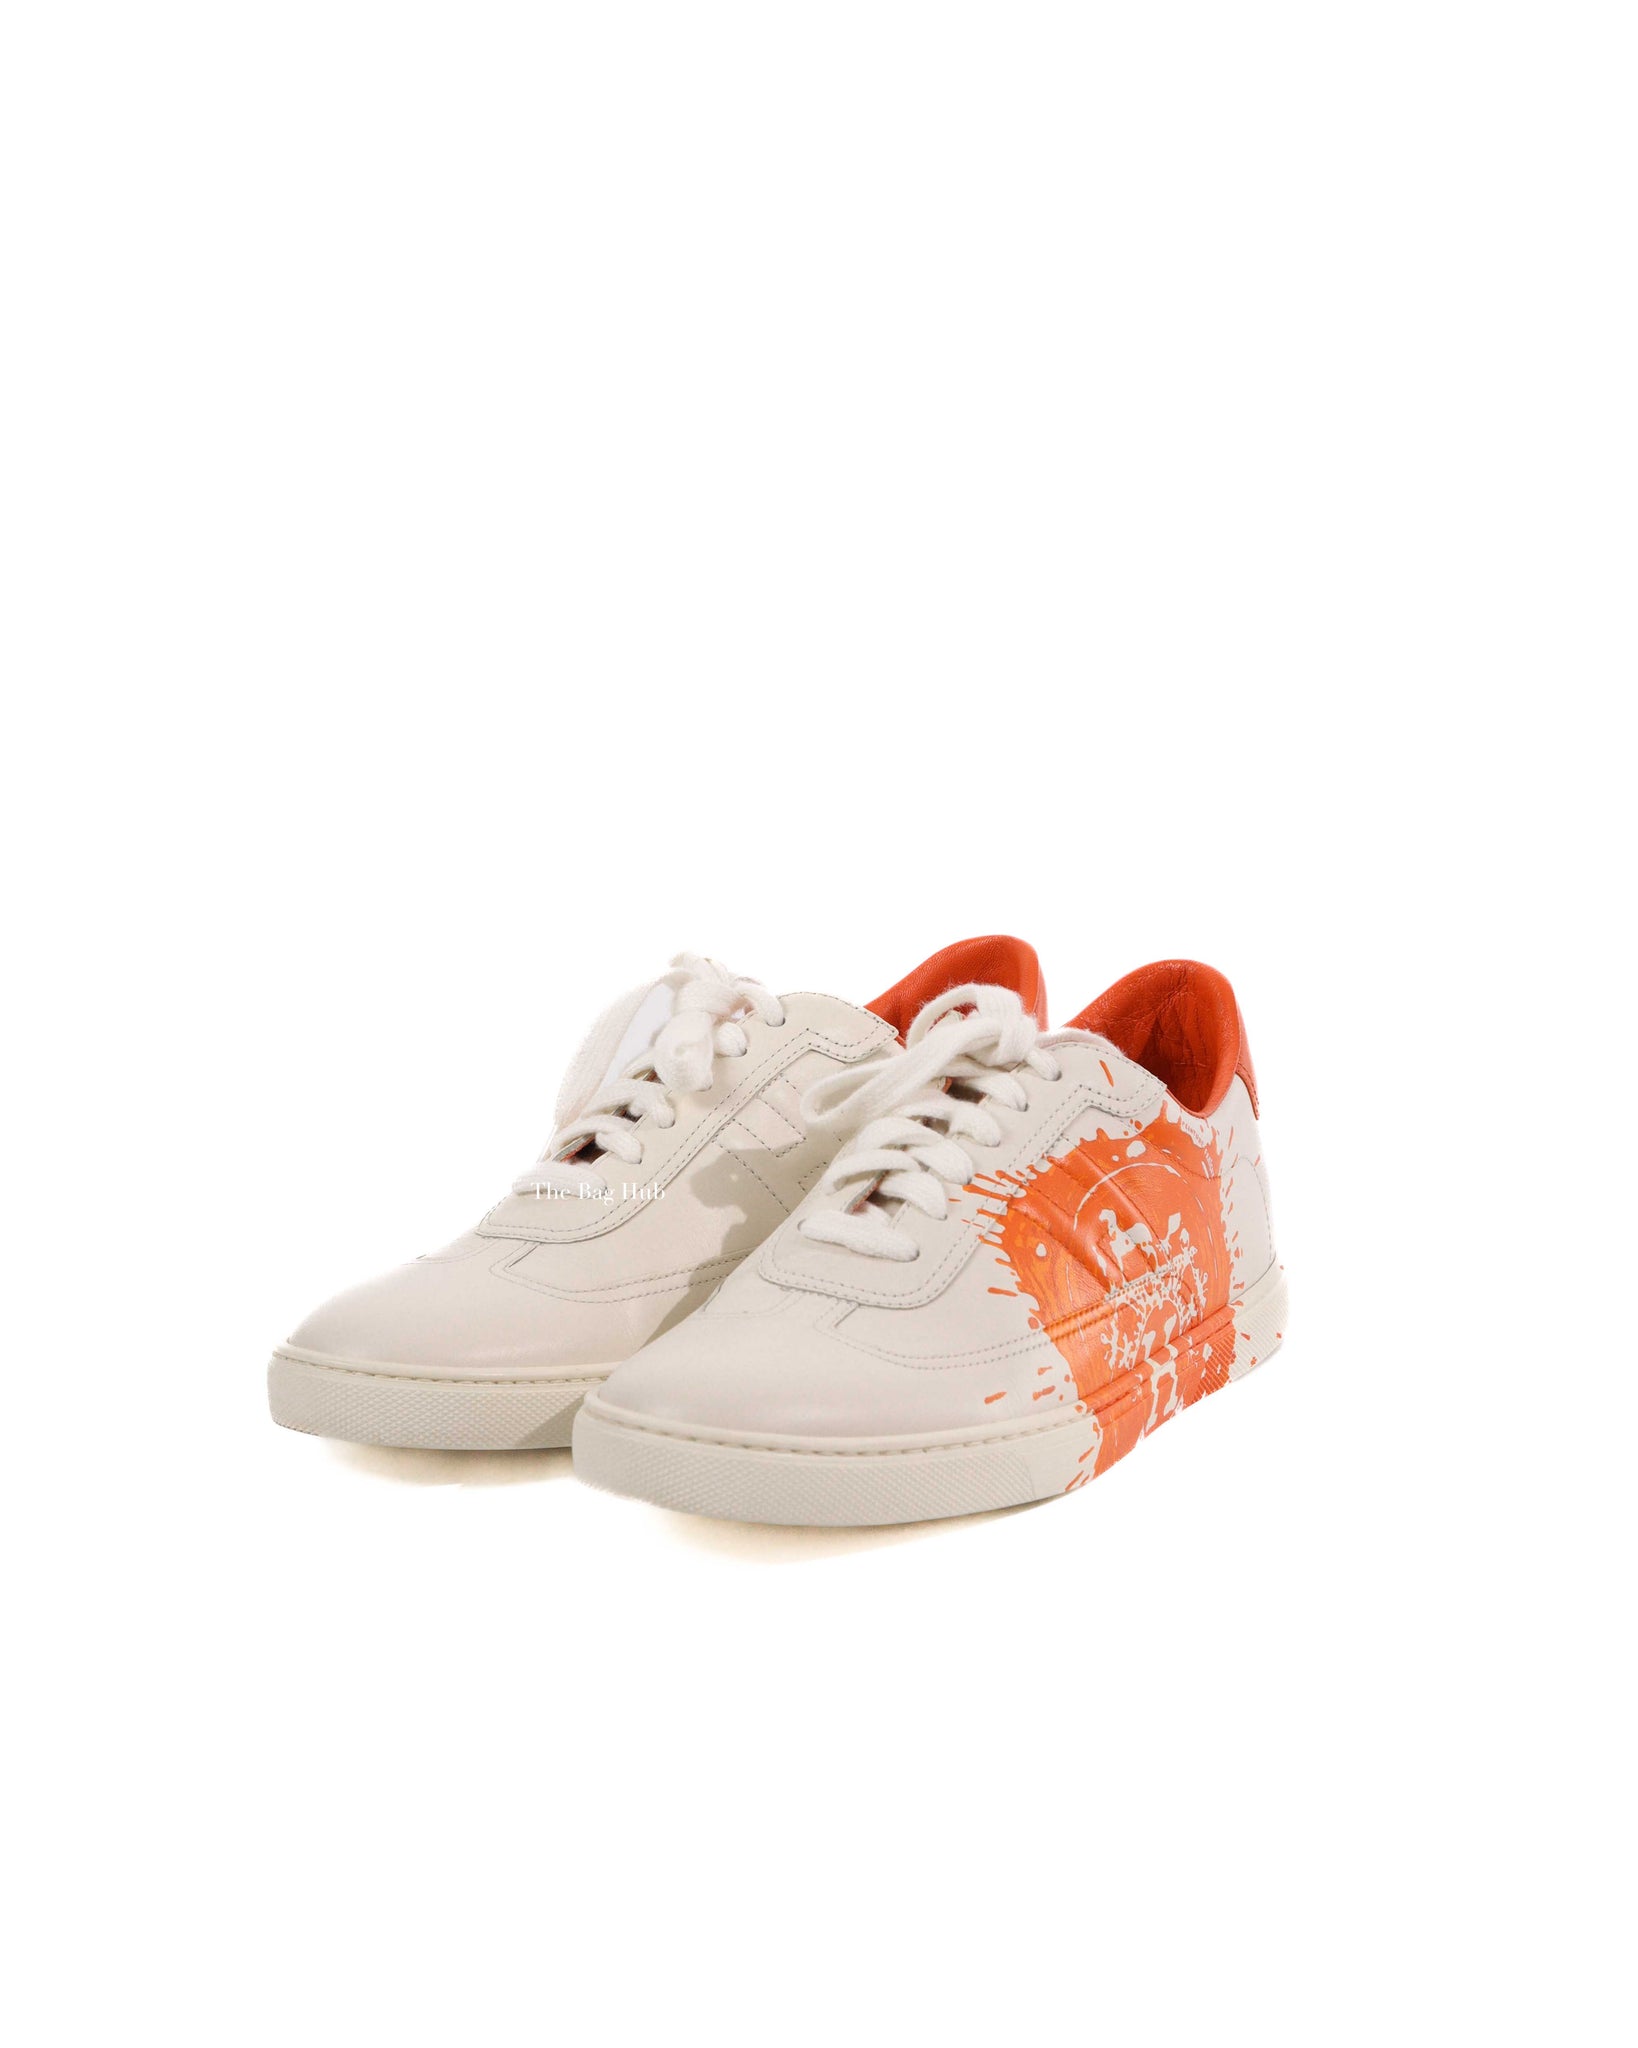 Hermes White/Orange Quicker Fresh Paint Sneakers Size 39.5